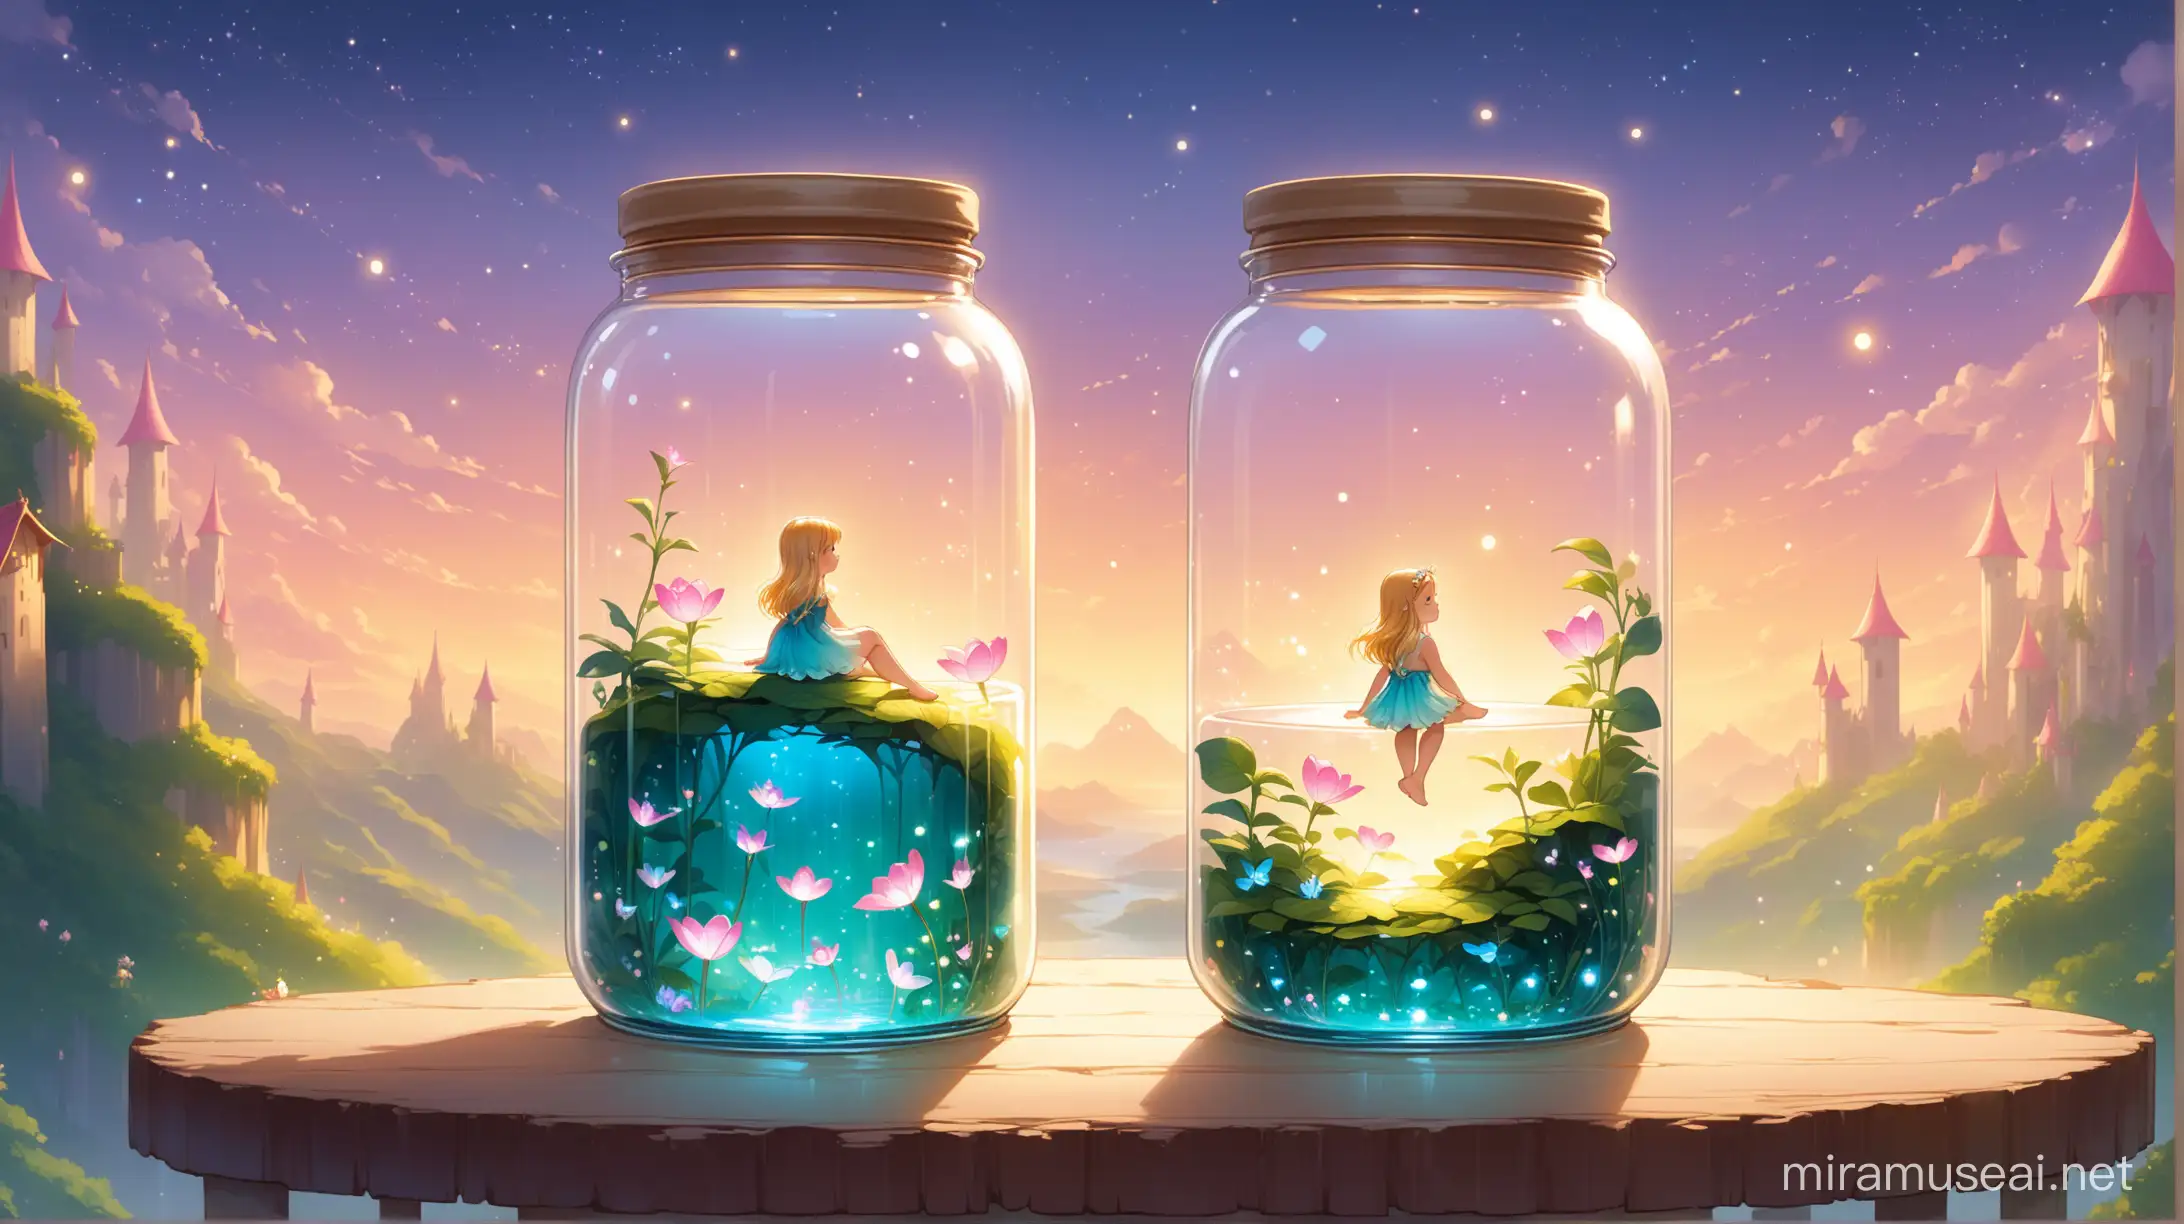 Tiny Human Sitting on Glass Jar Edge in Enchanting Scene